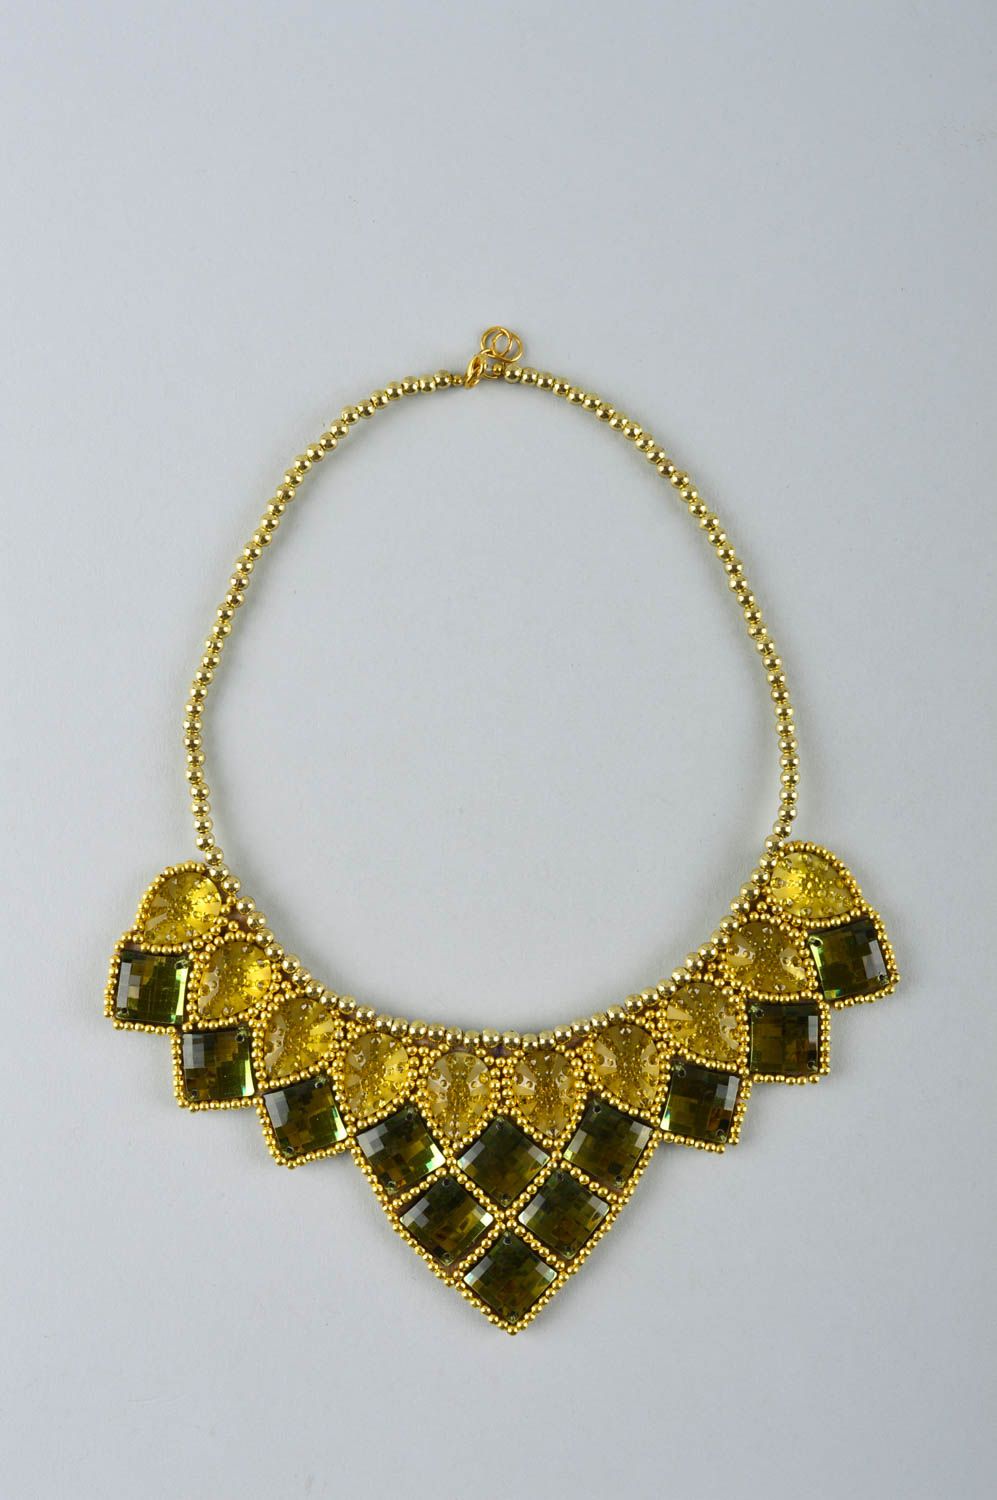 Handmade necklace designer accessory gift ideas elite jewelry bead necklace photo 2